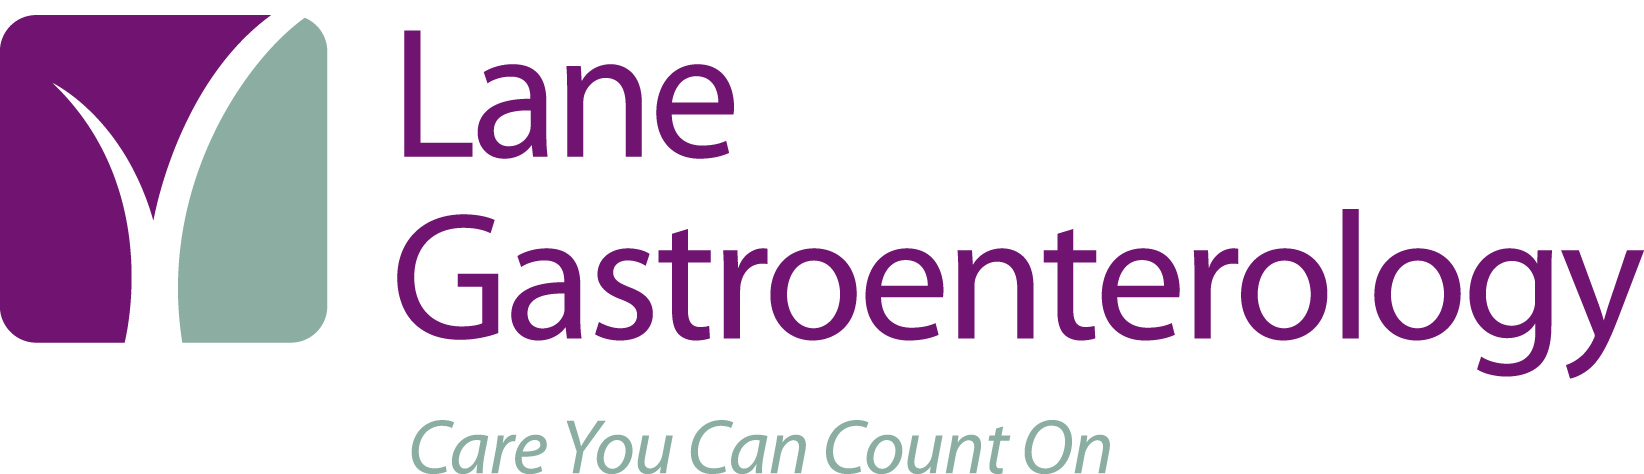 Gastroenterology Logo 2019